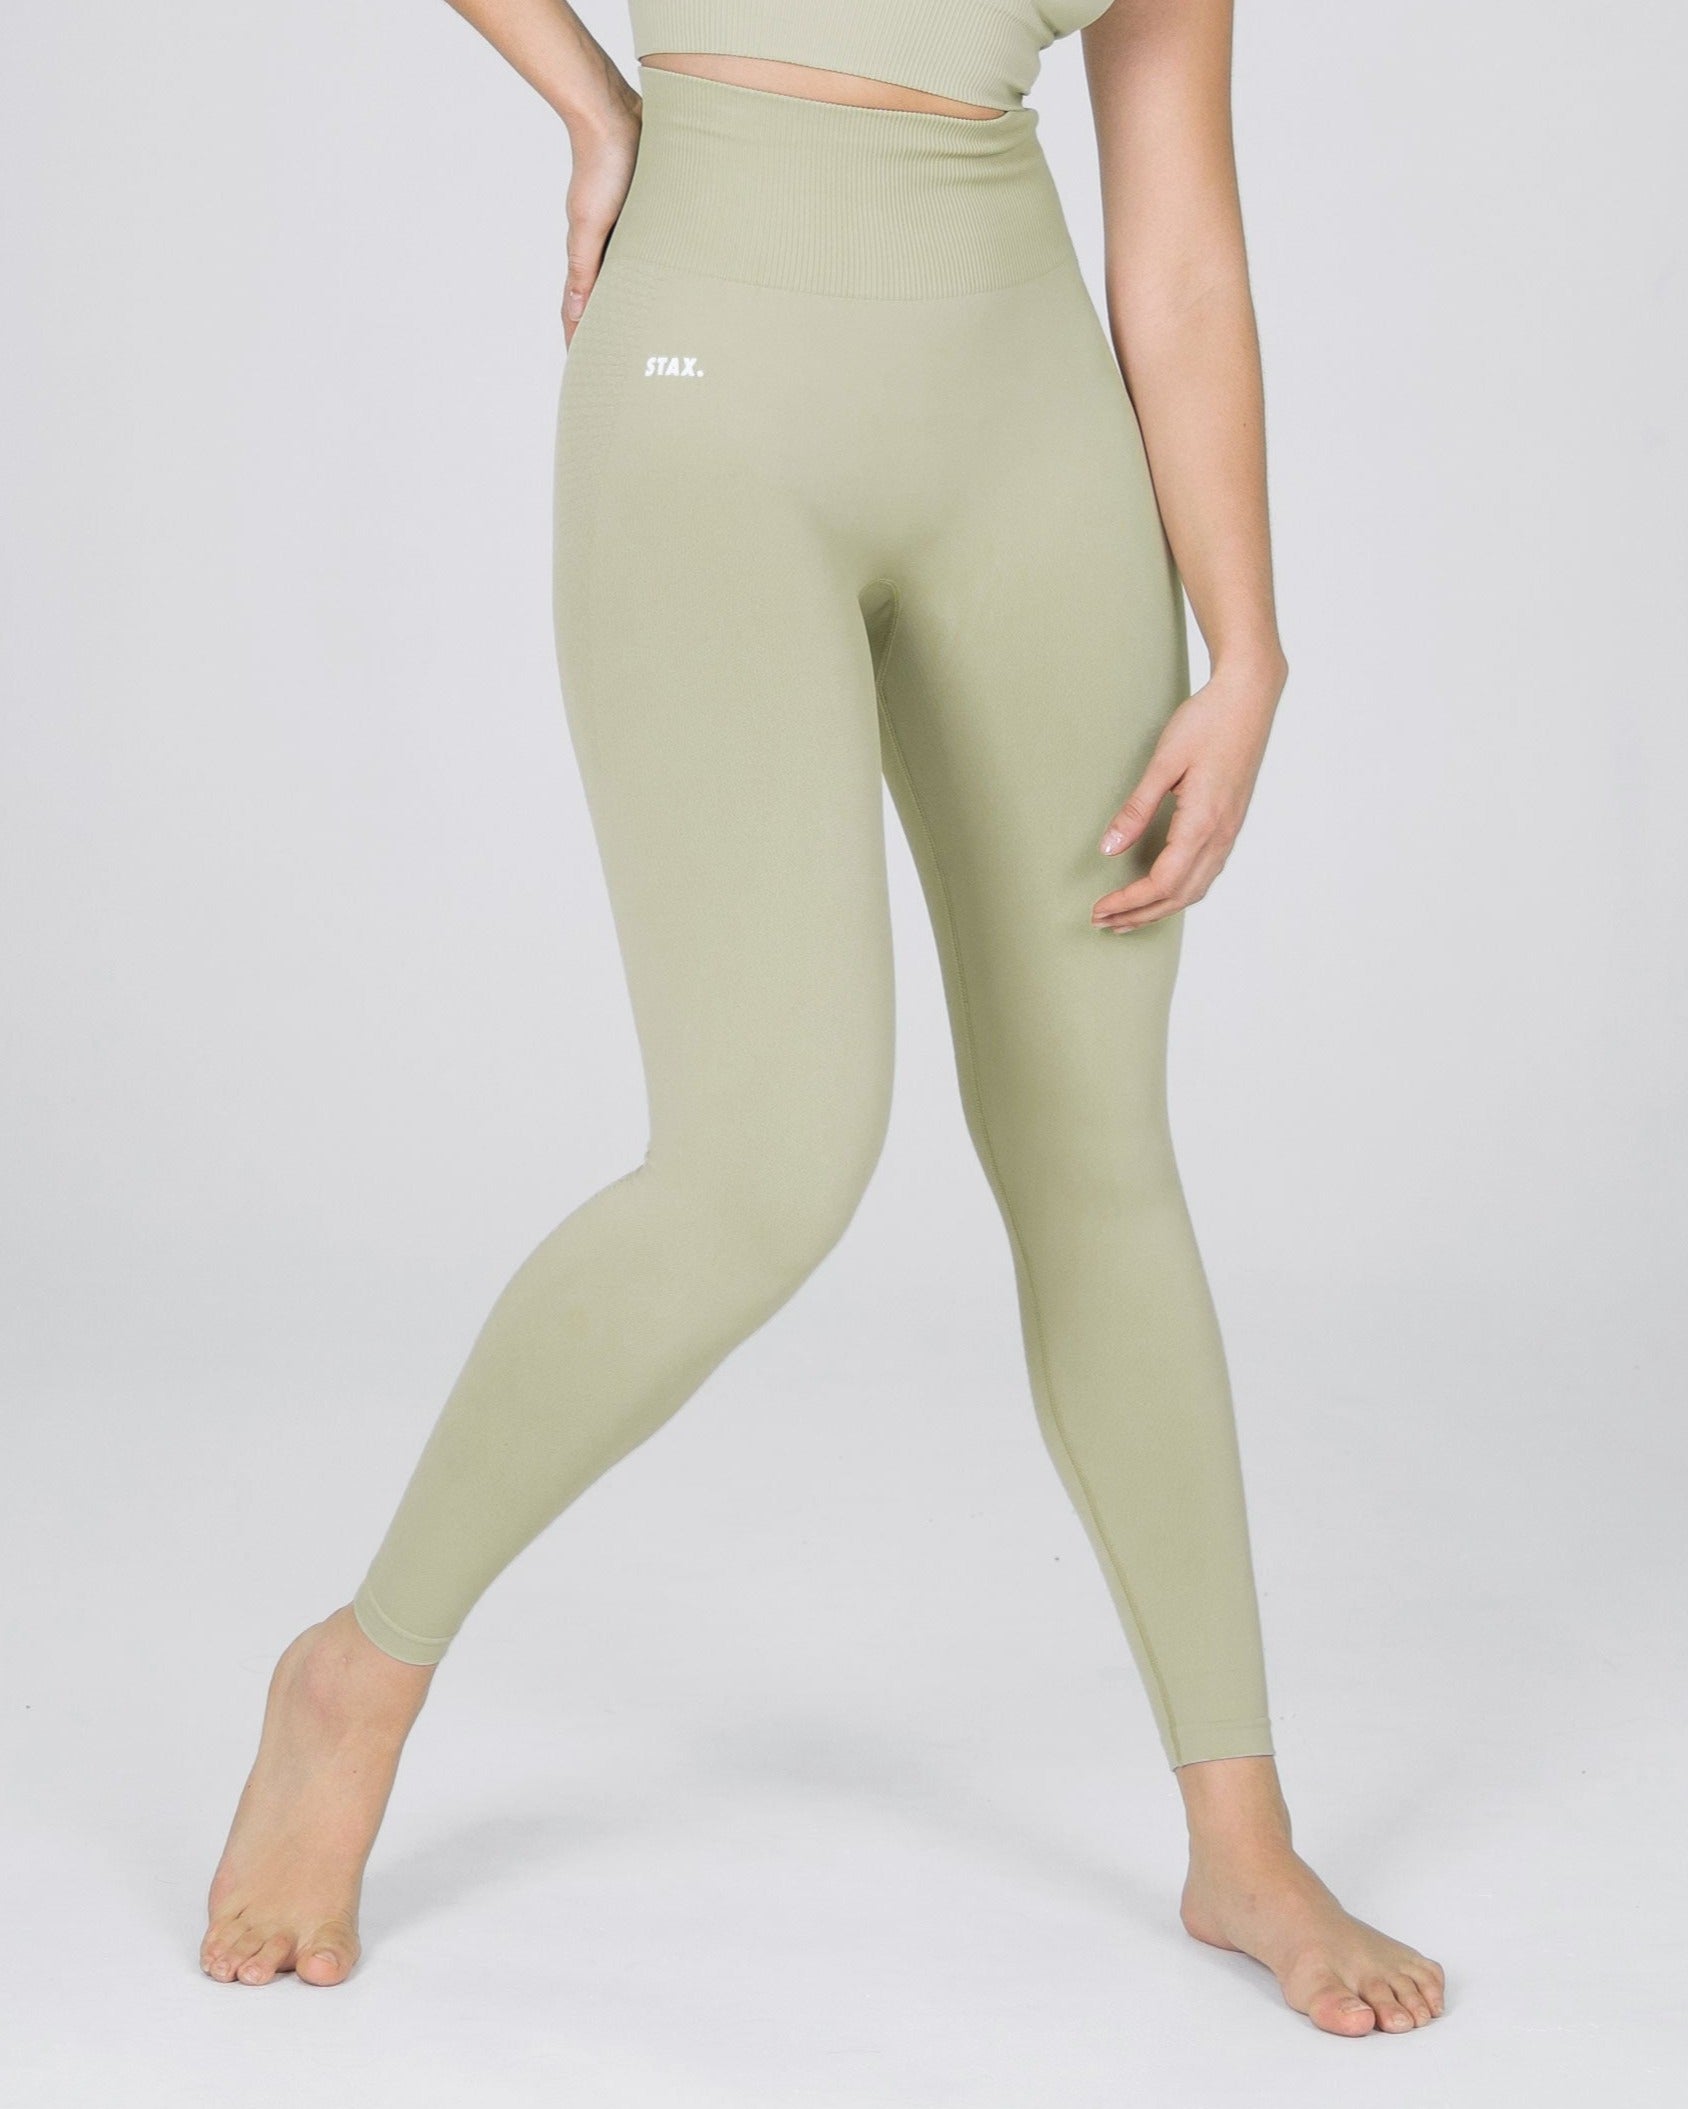 stax-premium-seamless-v6-full-length-tights-viridis-green